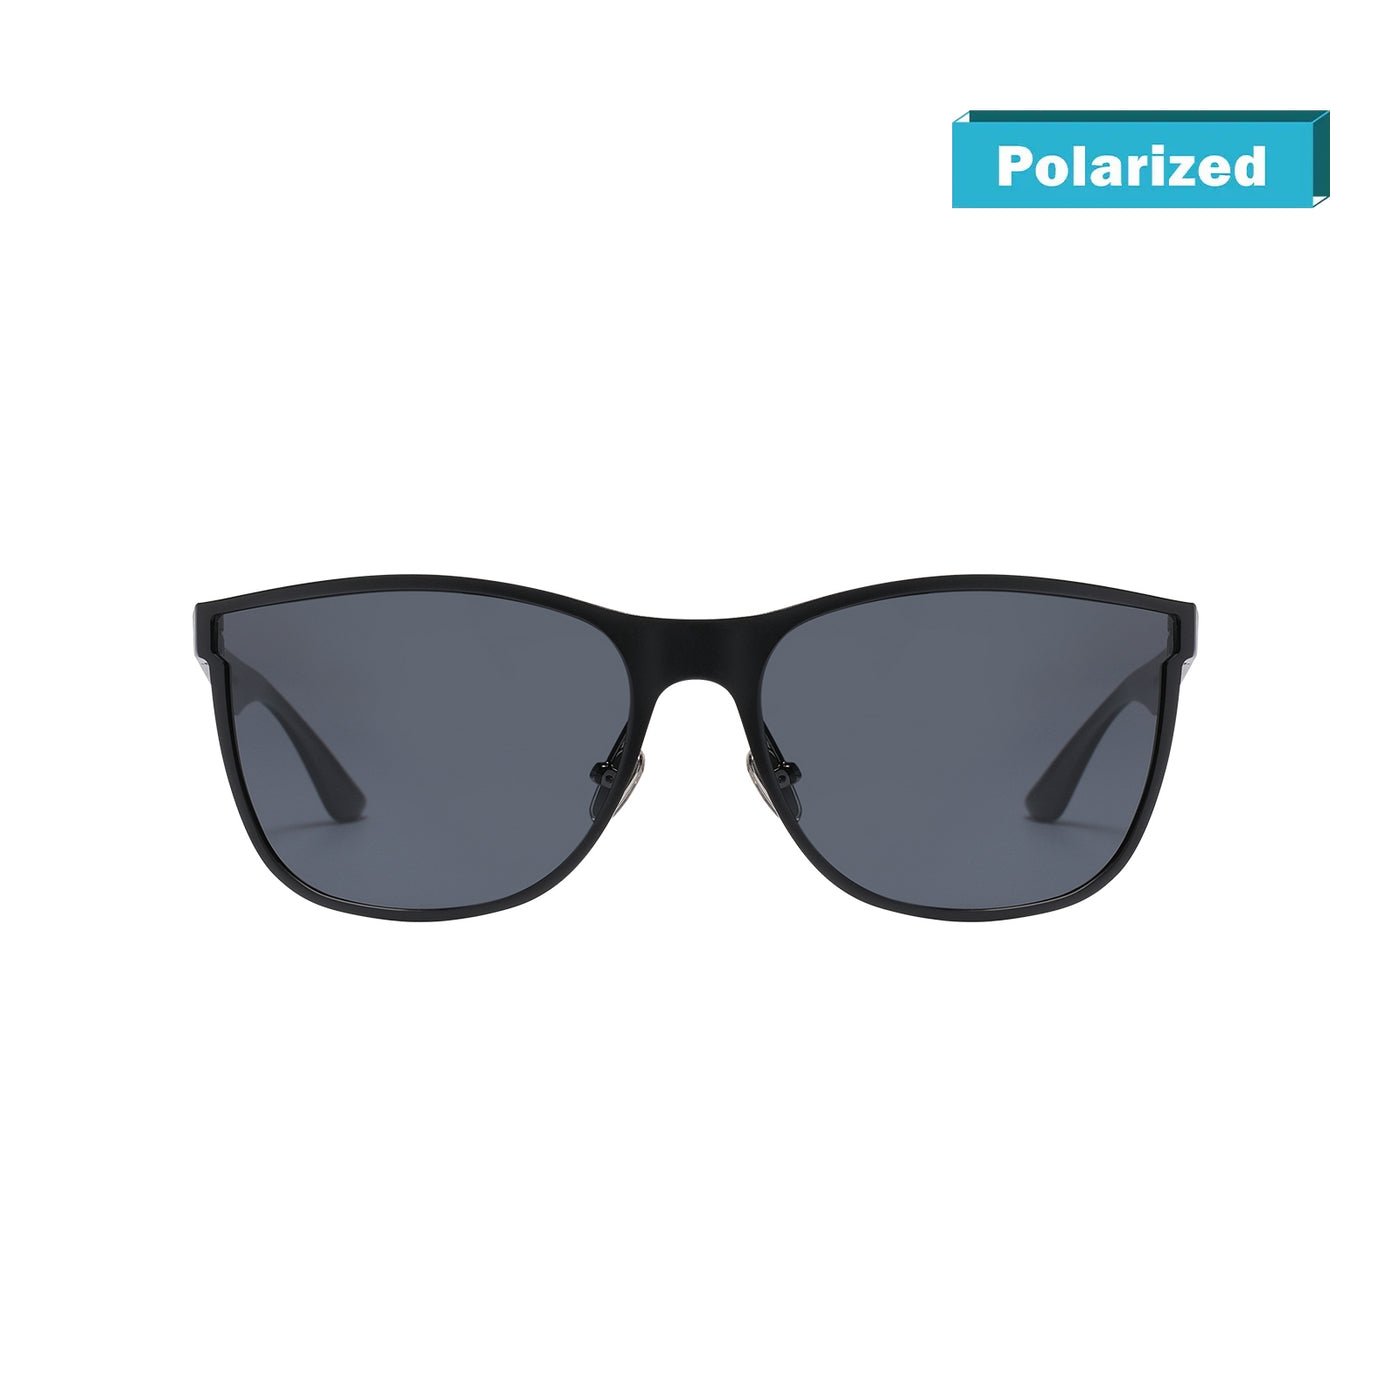 DUCO Polarized Driving Sunglasses Rimmed Glasses UV400 protection 8205